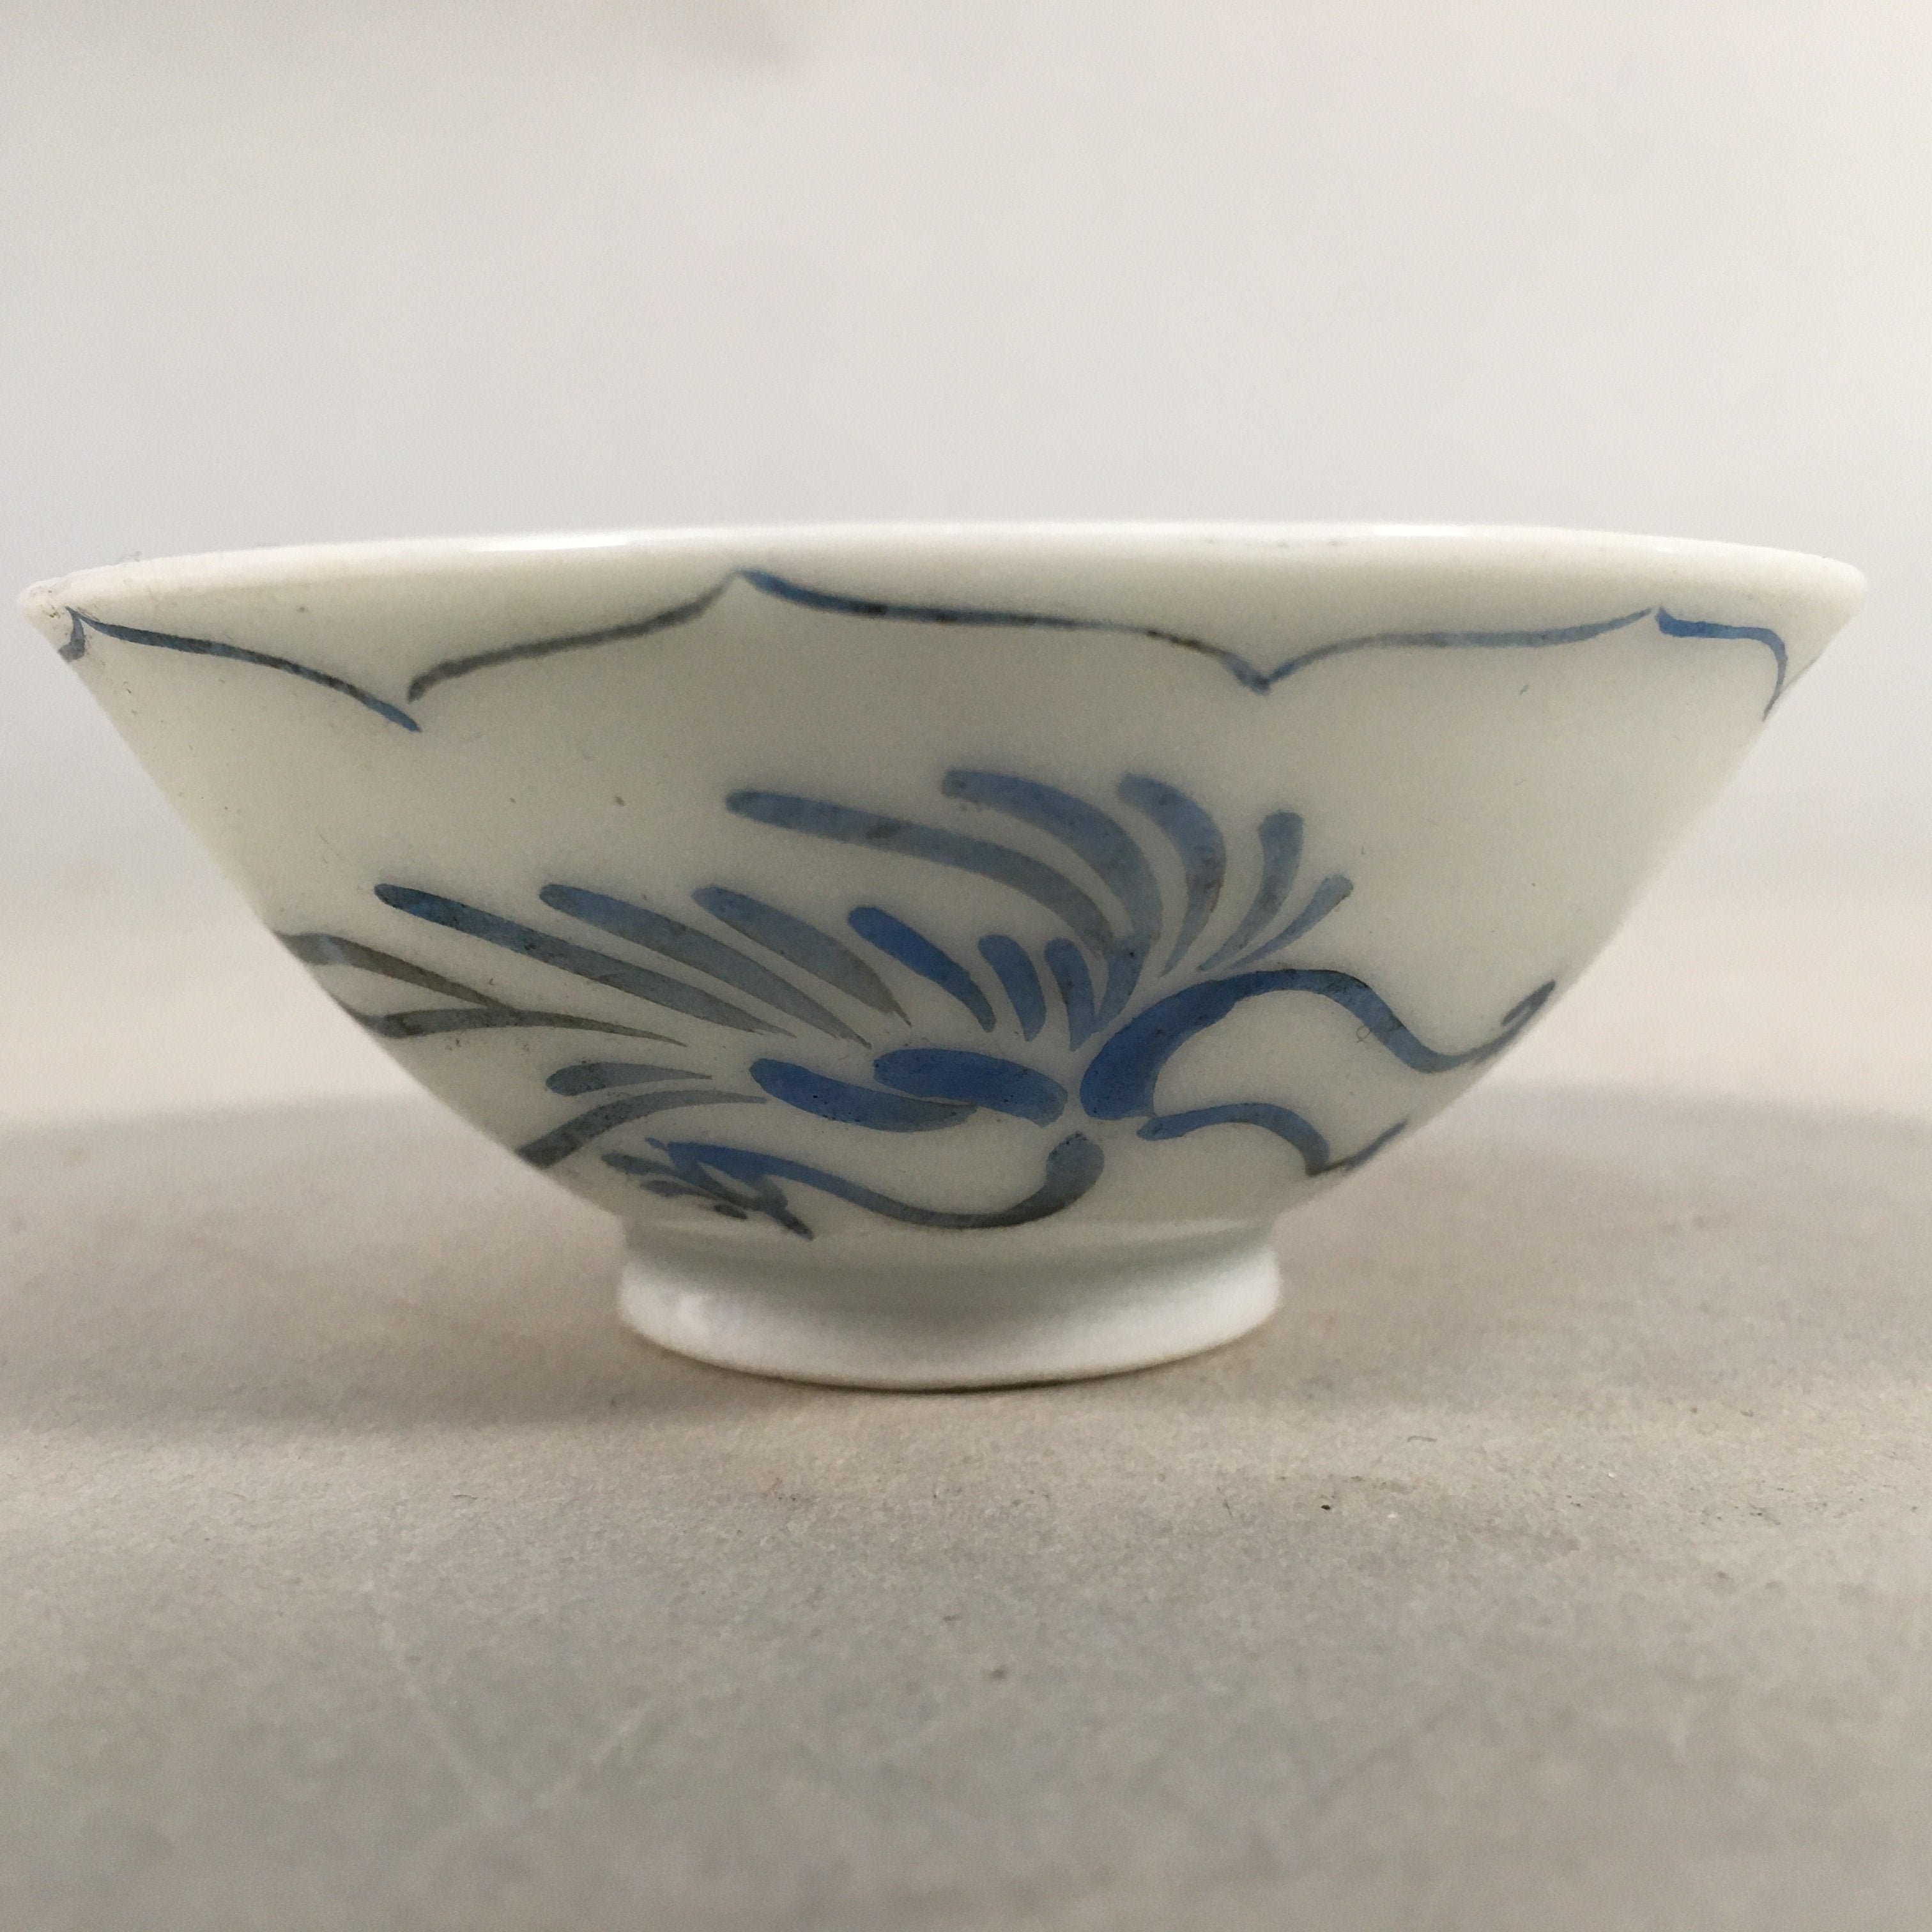 Japanese Porcelain Sake Cup Guinomi Sakazuki Vtg Phoenix Blue White GU791